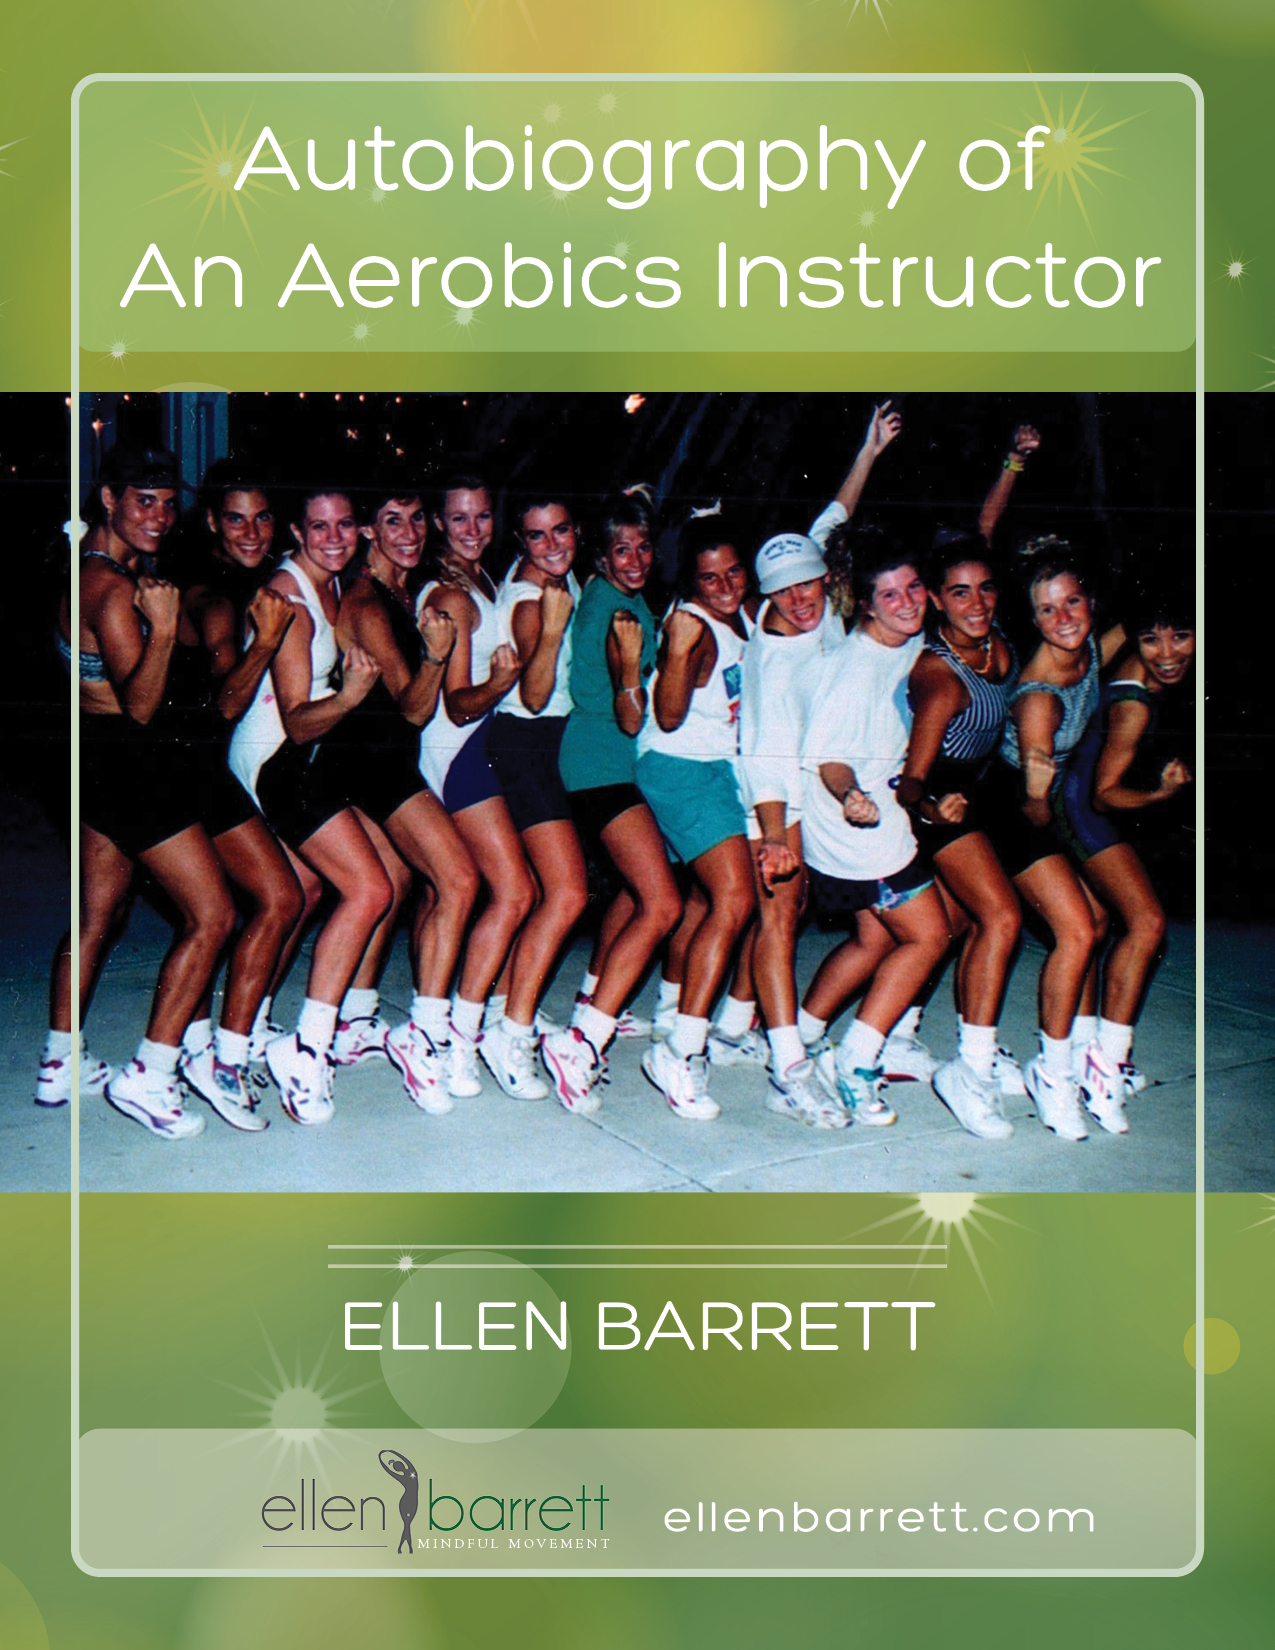 Autobiography of An Aerobics Instructor by Ellen Barrett